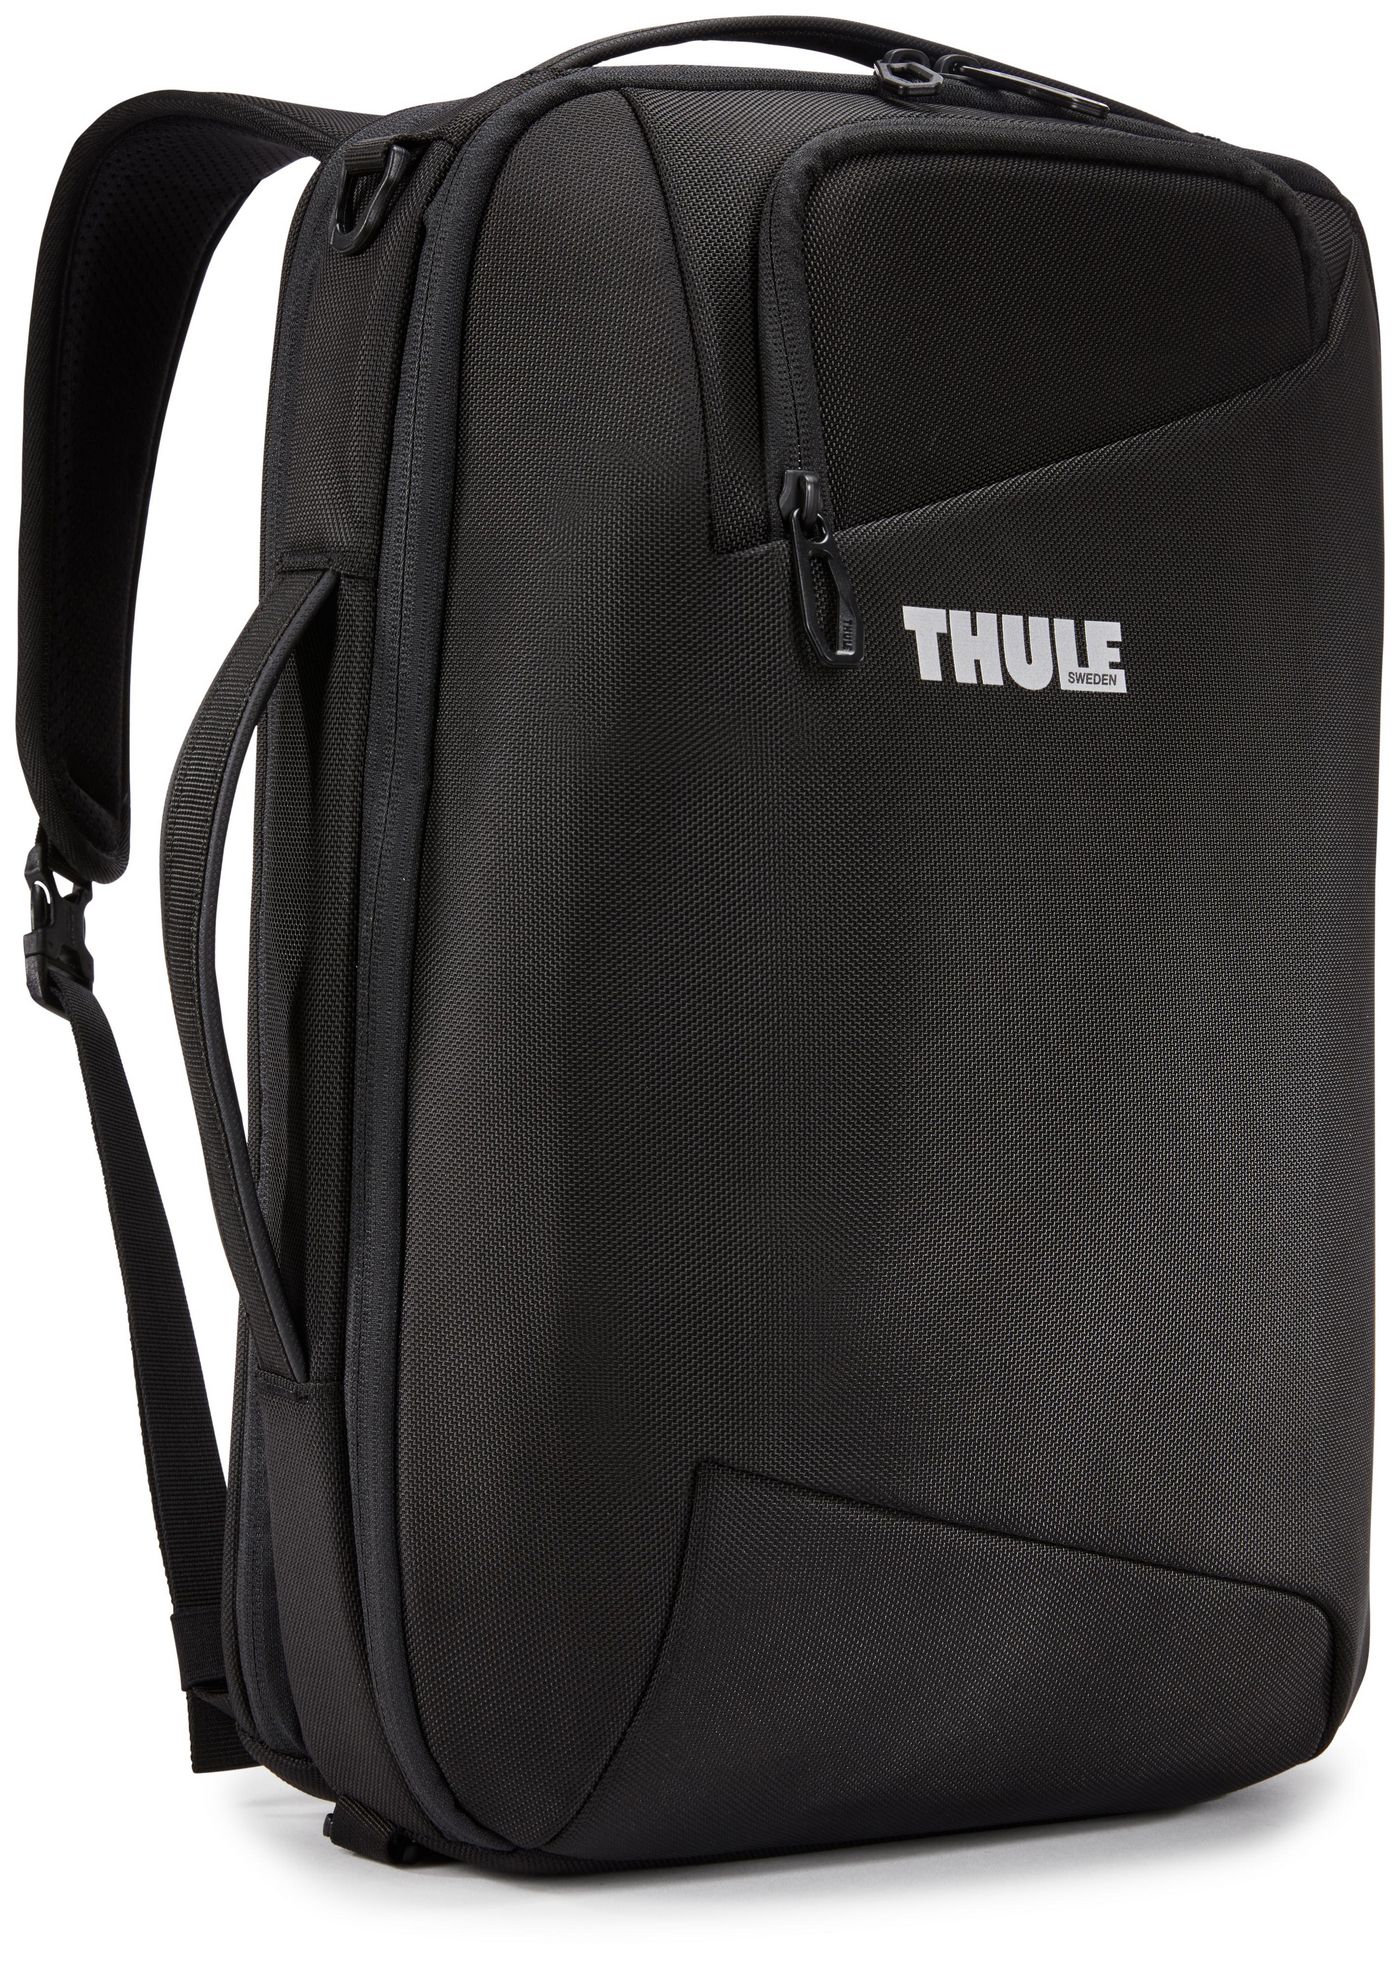 Thule 3204815 W128275244 Accent Taclb2116 - Black 